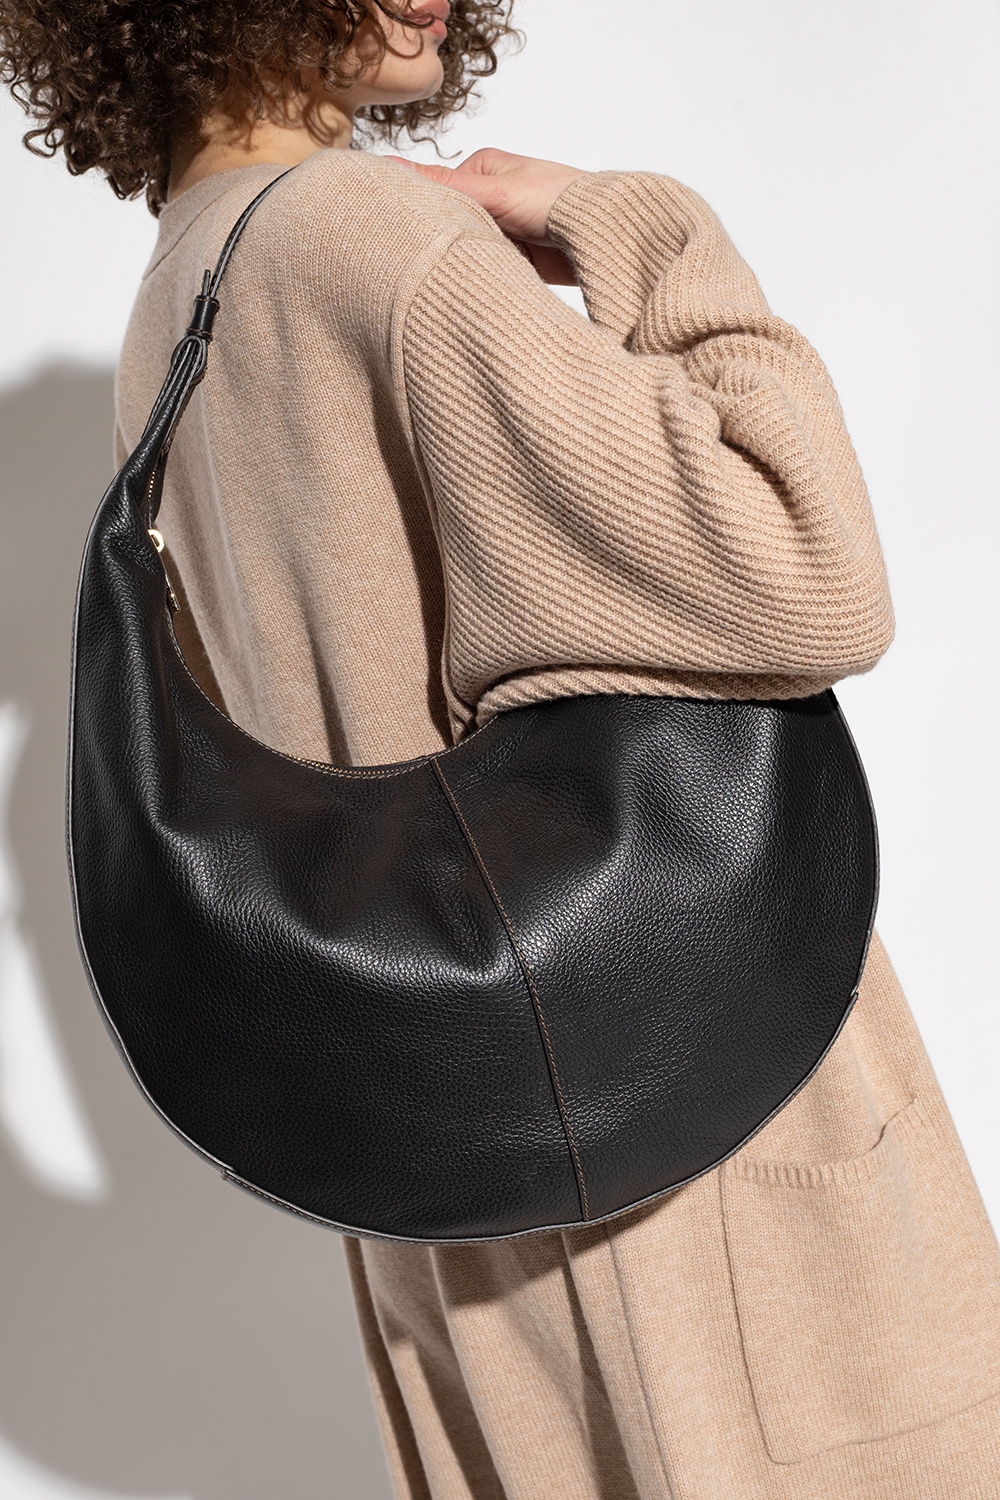 GenesinlifeShops | Furla 'Miastella Large' shoulder bag | Dior